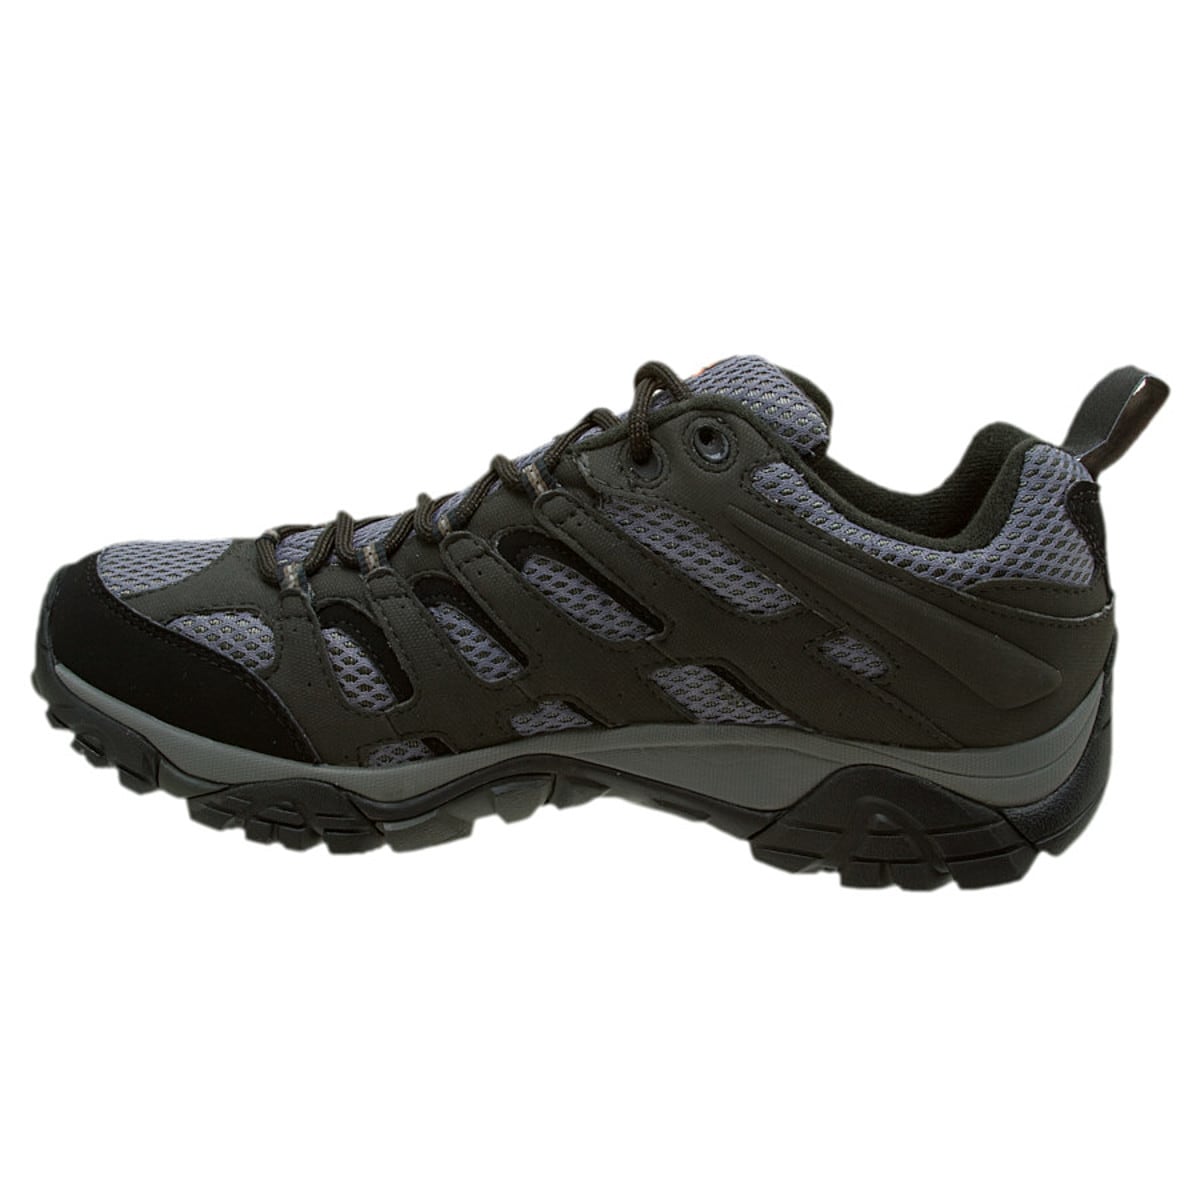 Merrell Moab Gore-Tex Hiking Shoe - Men's Footwear